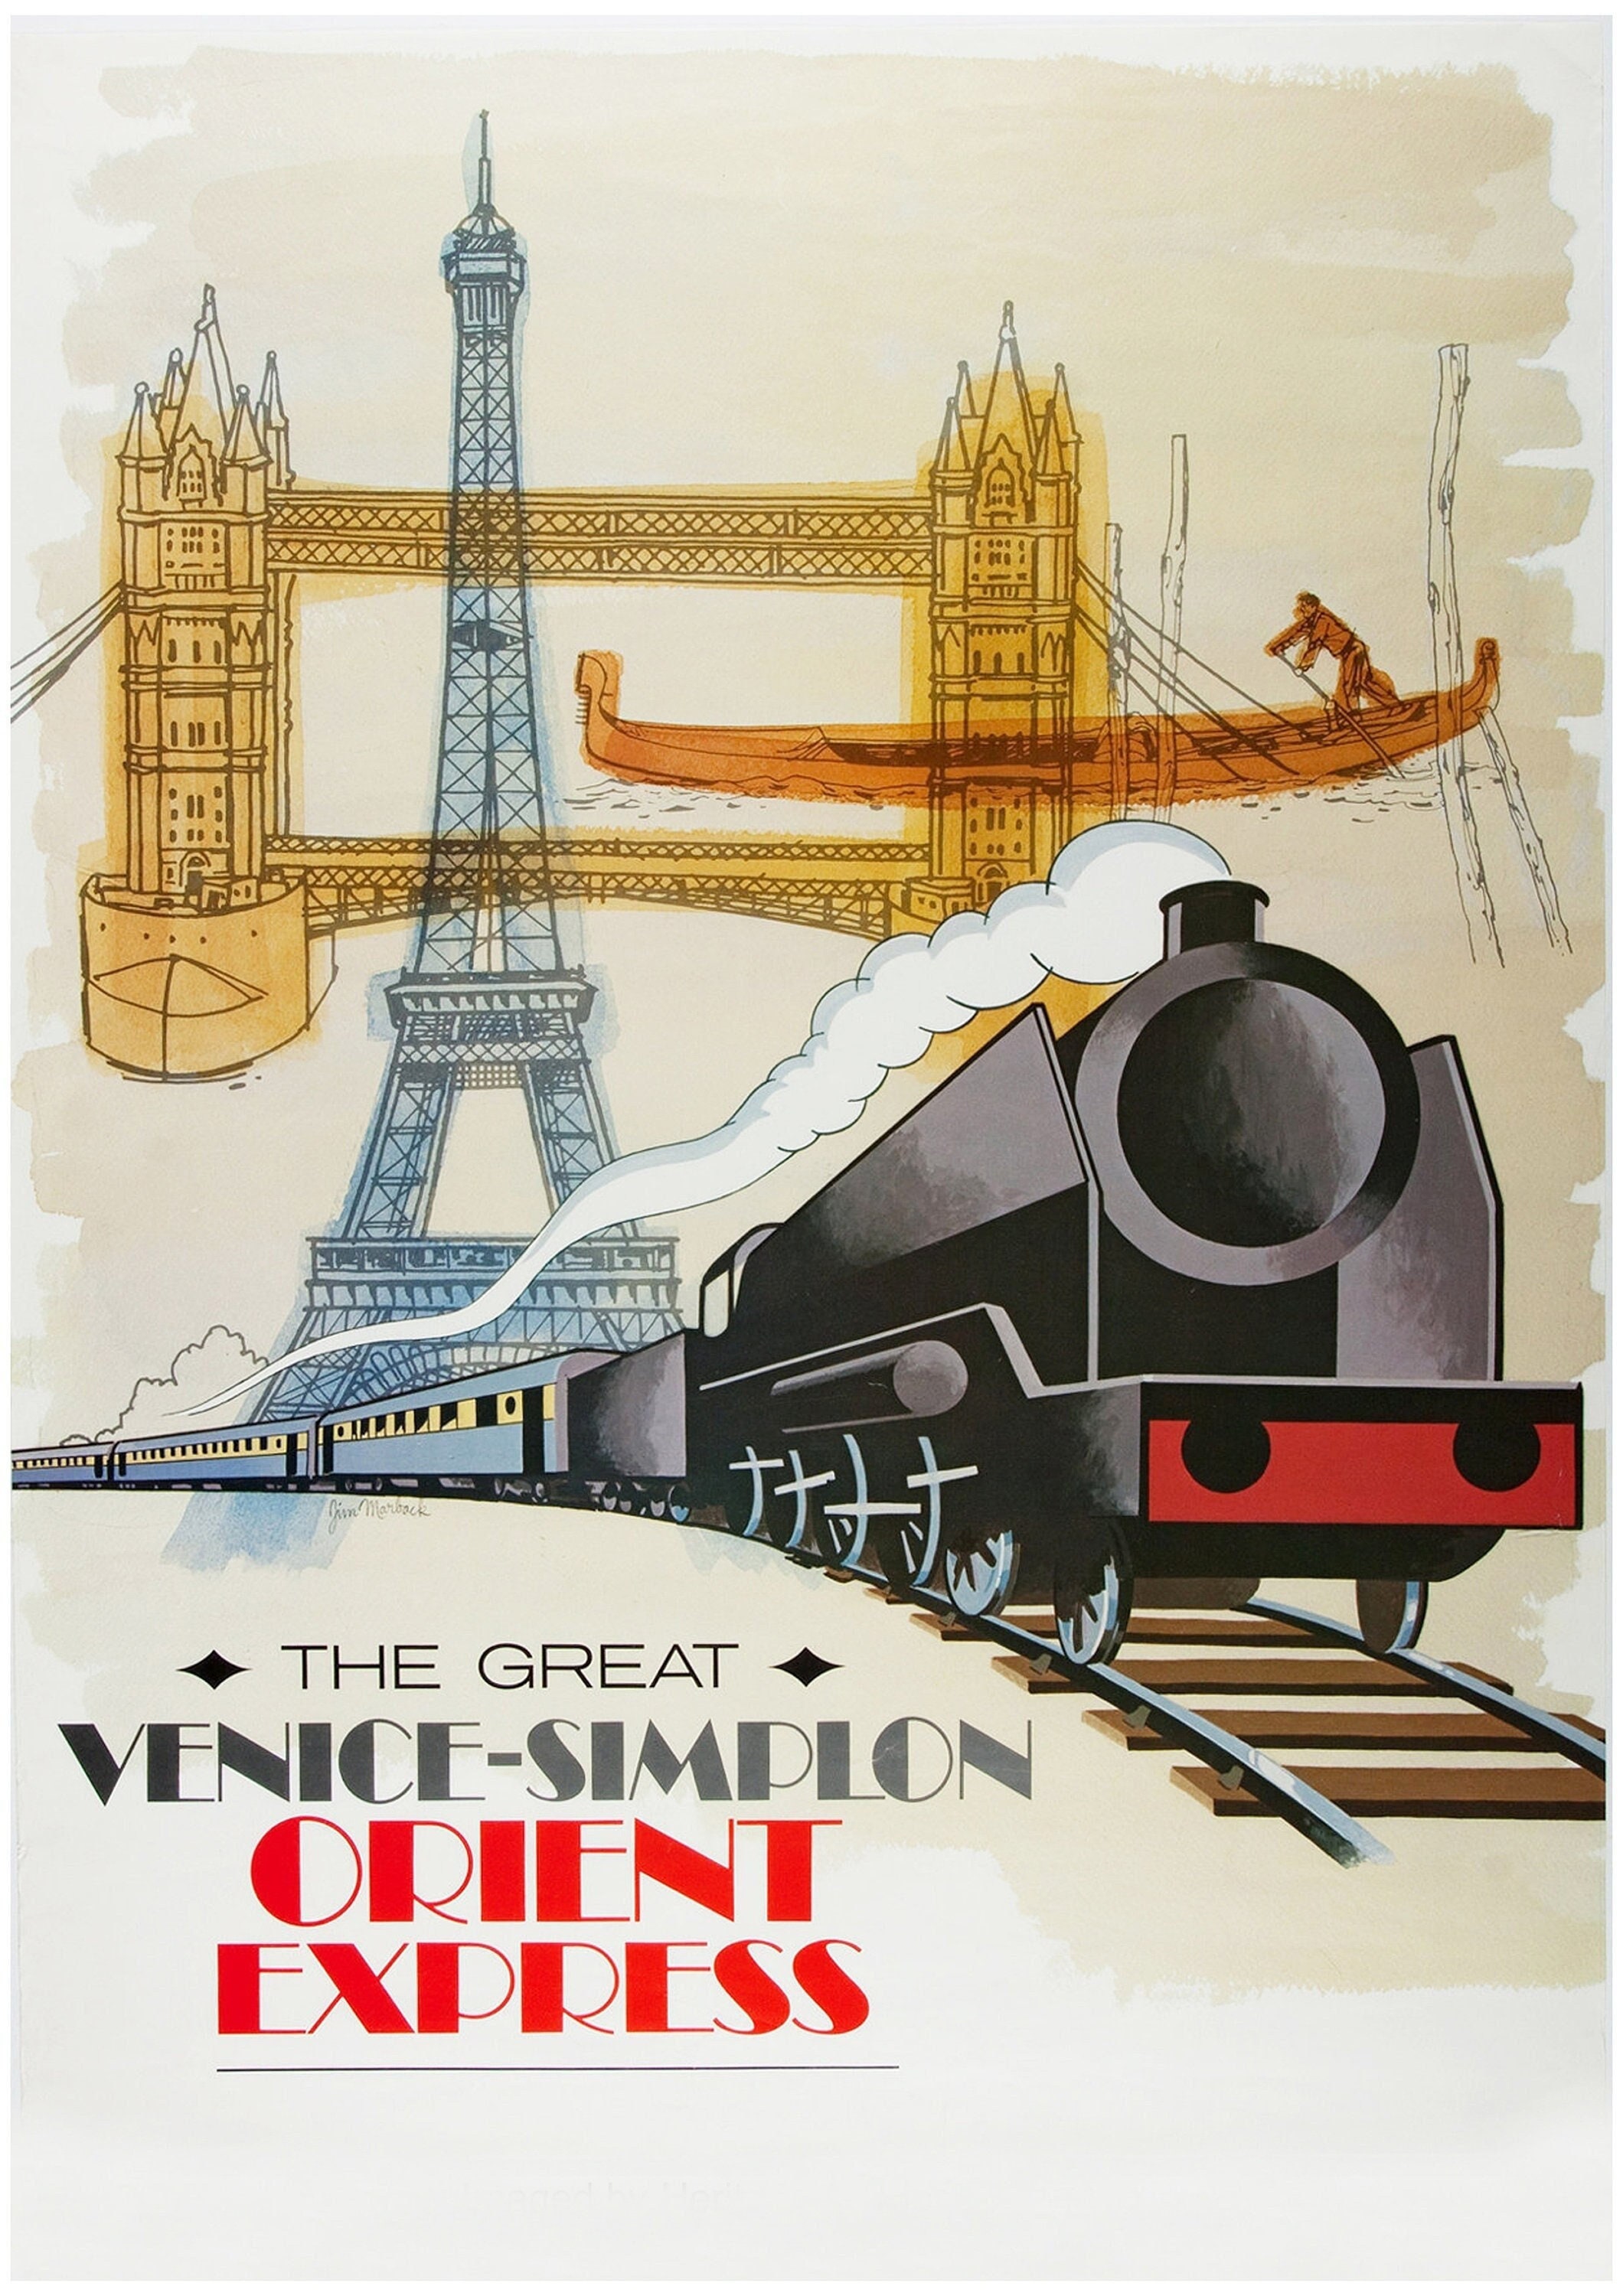 Orient Express Travel Poster Train Vintage Train Print -  Denmark